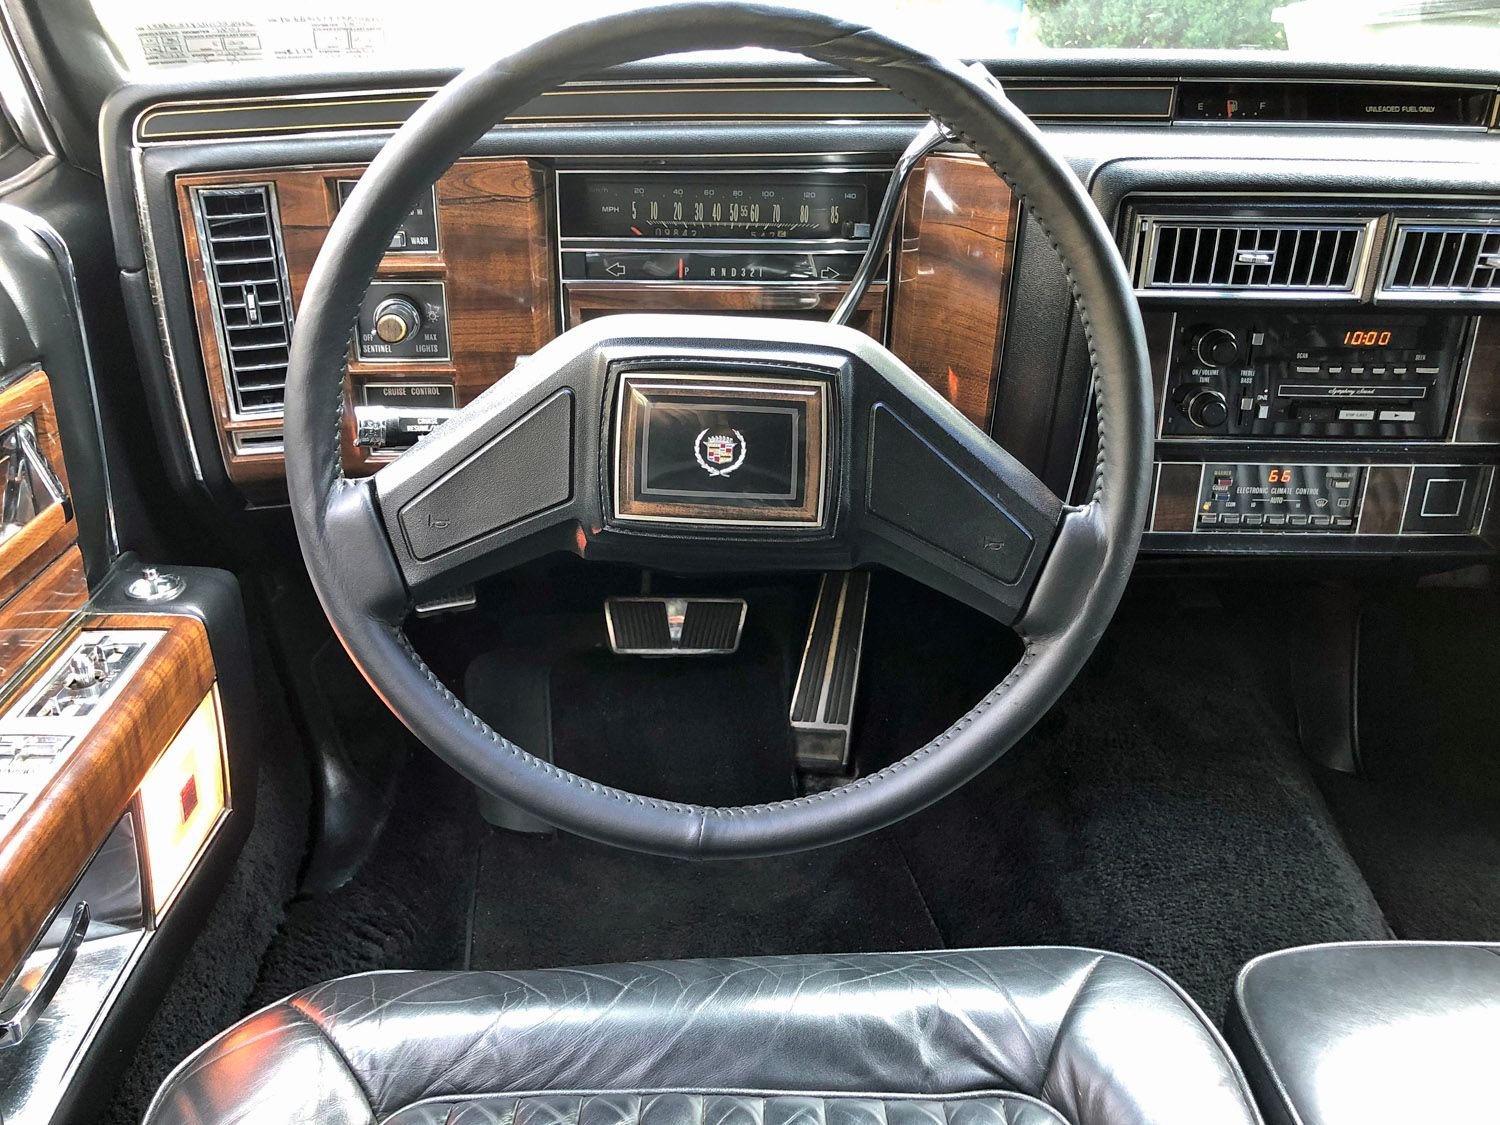 1989 Cadillac Brougham